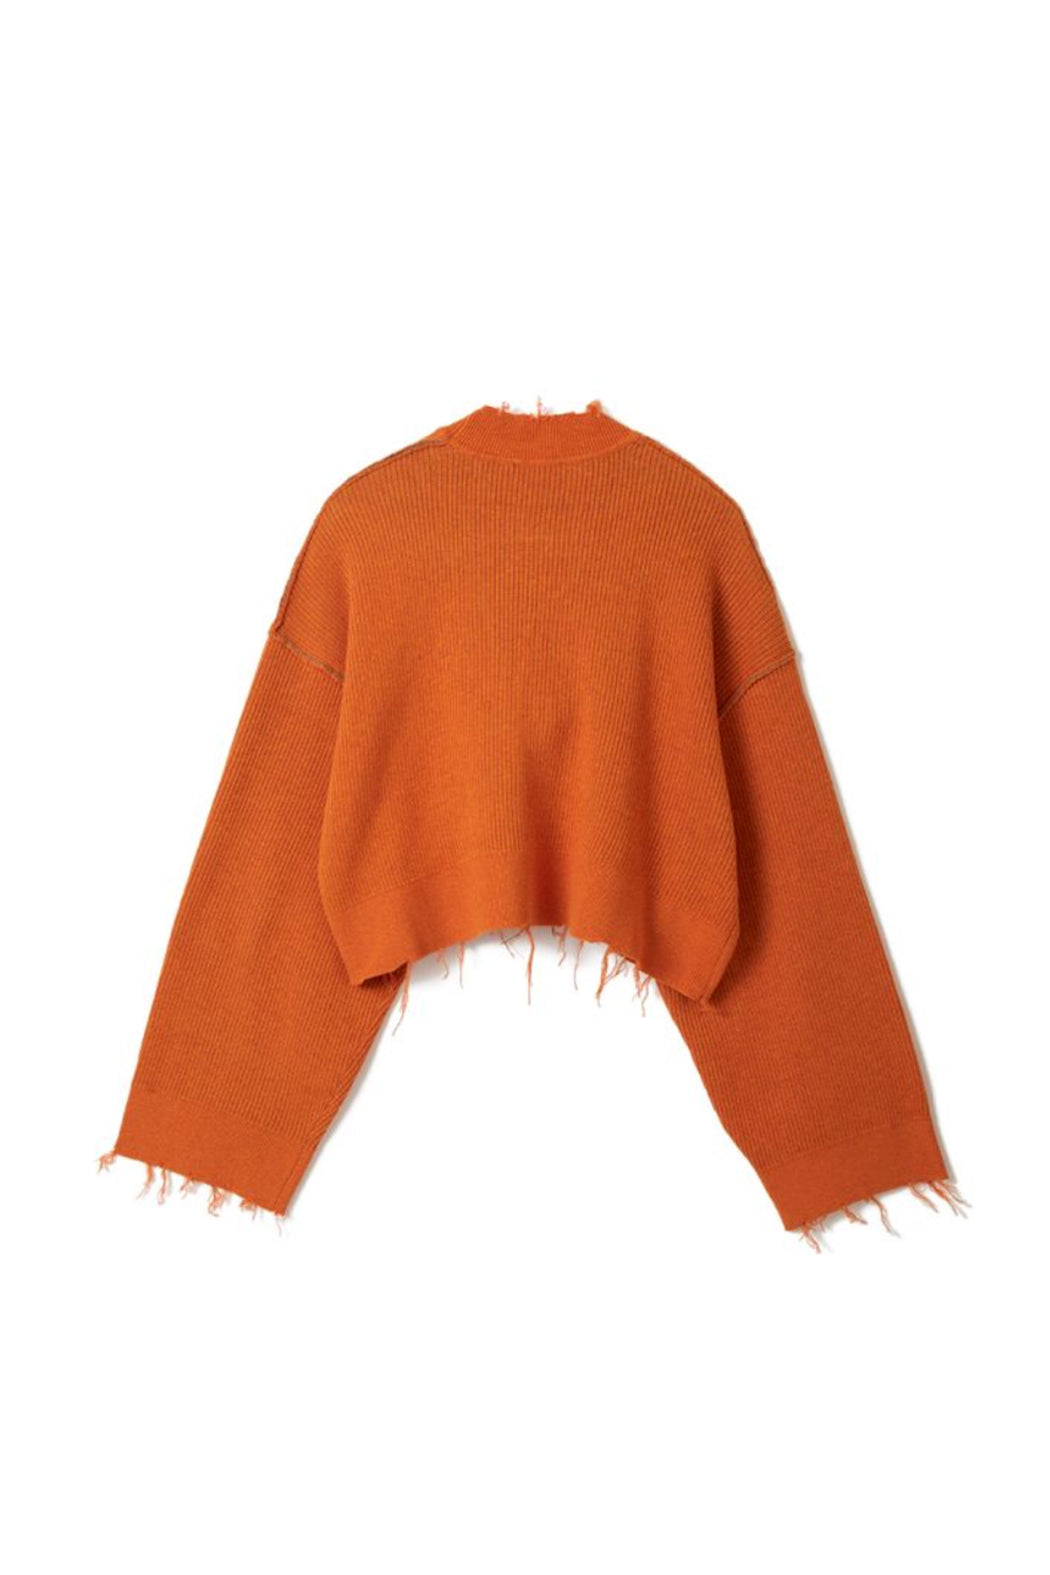 Urban Revivo shrunken cropped cardigan in orange rib knit